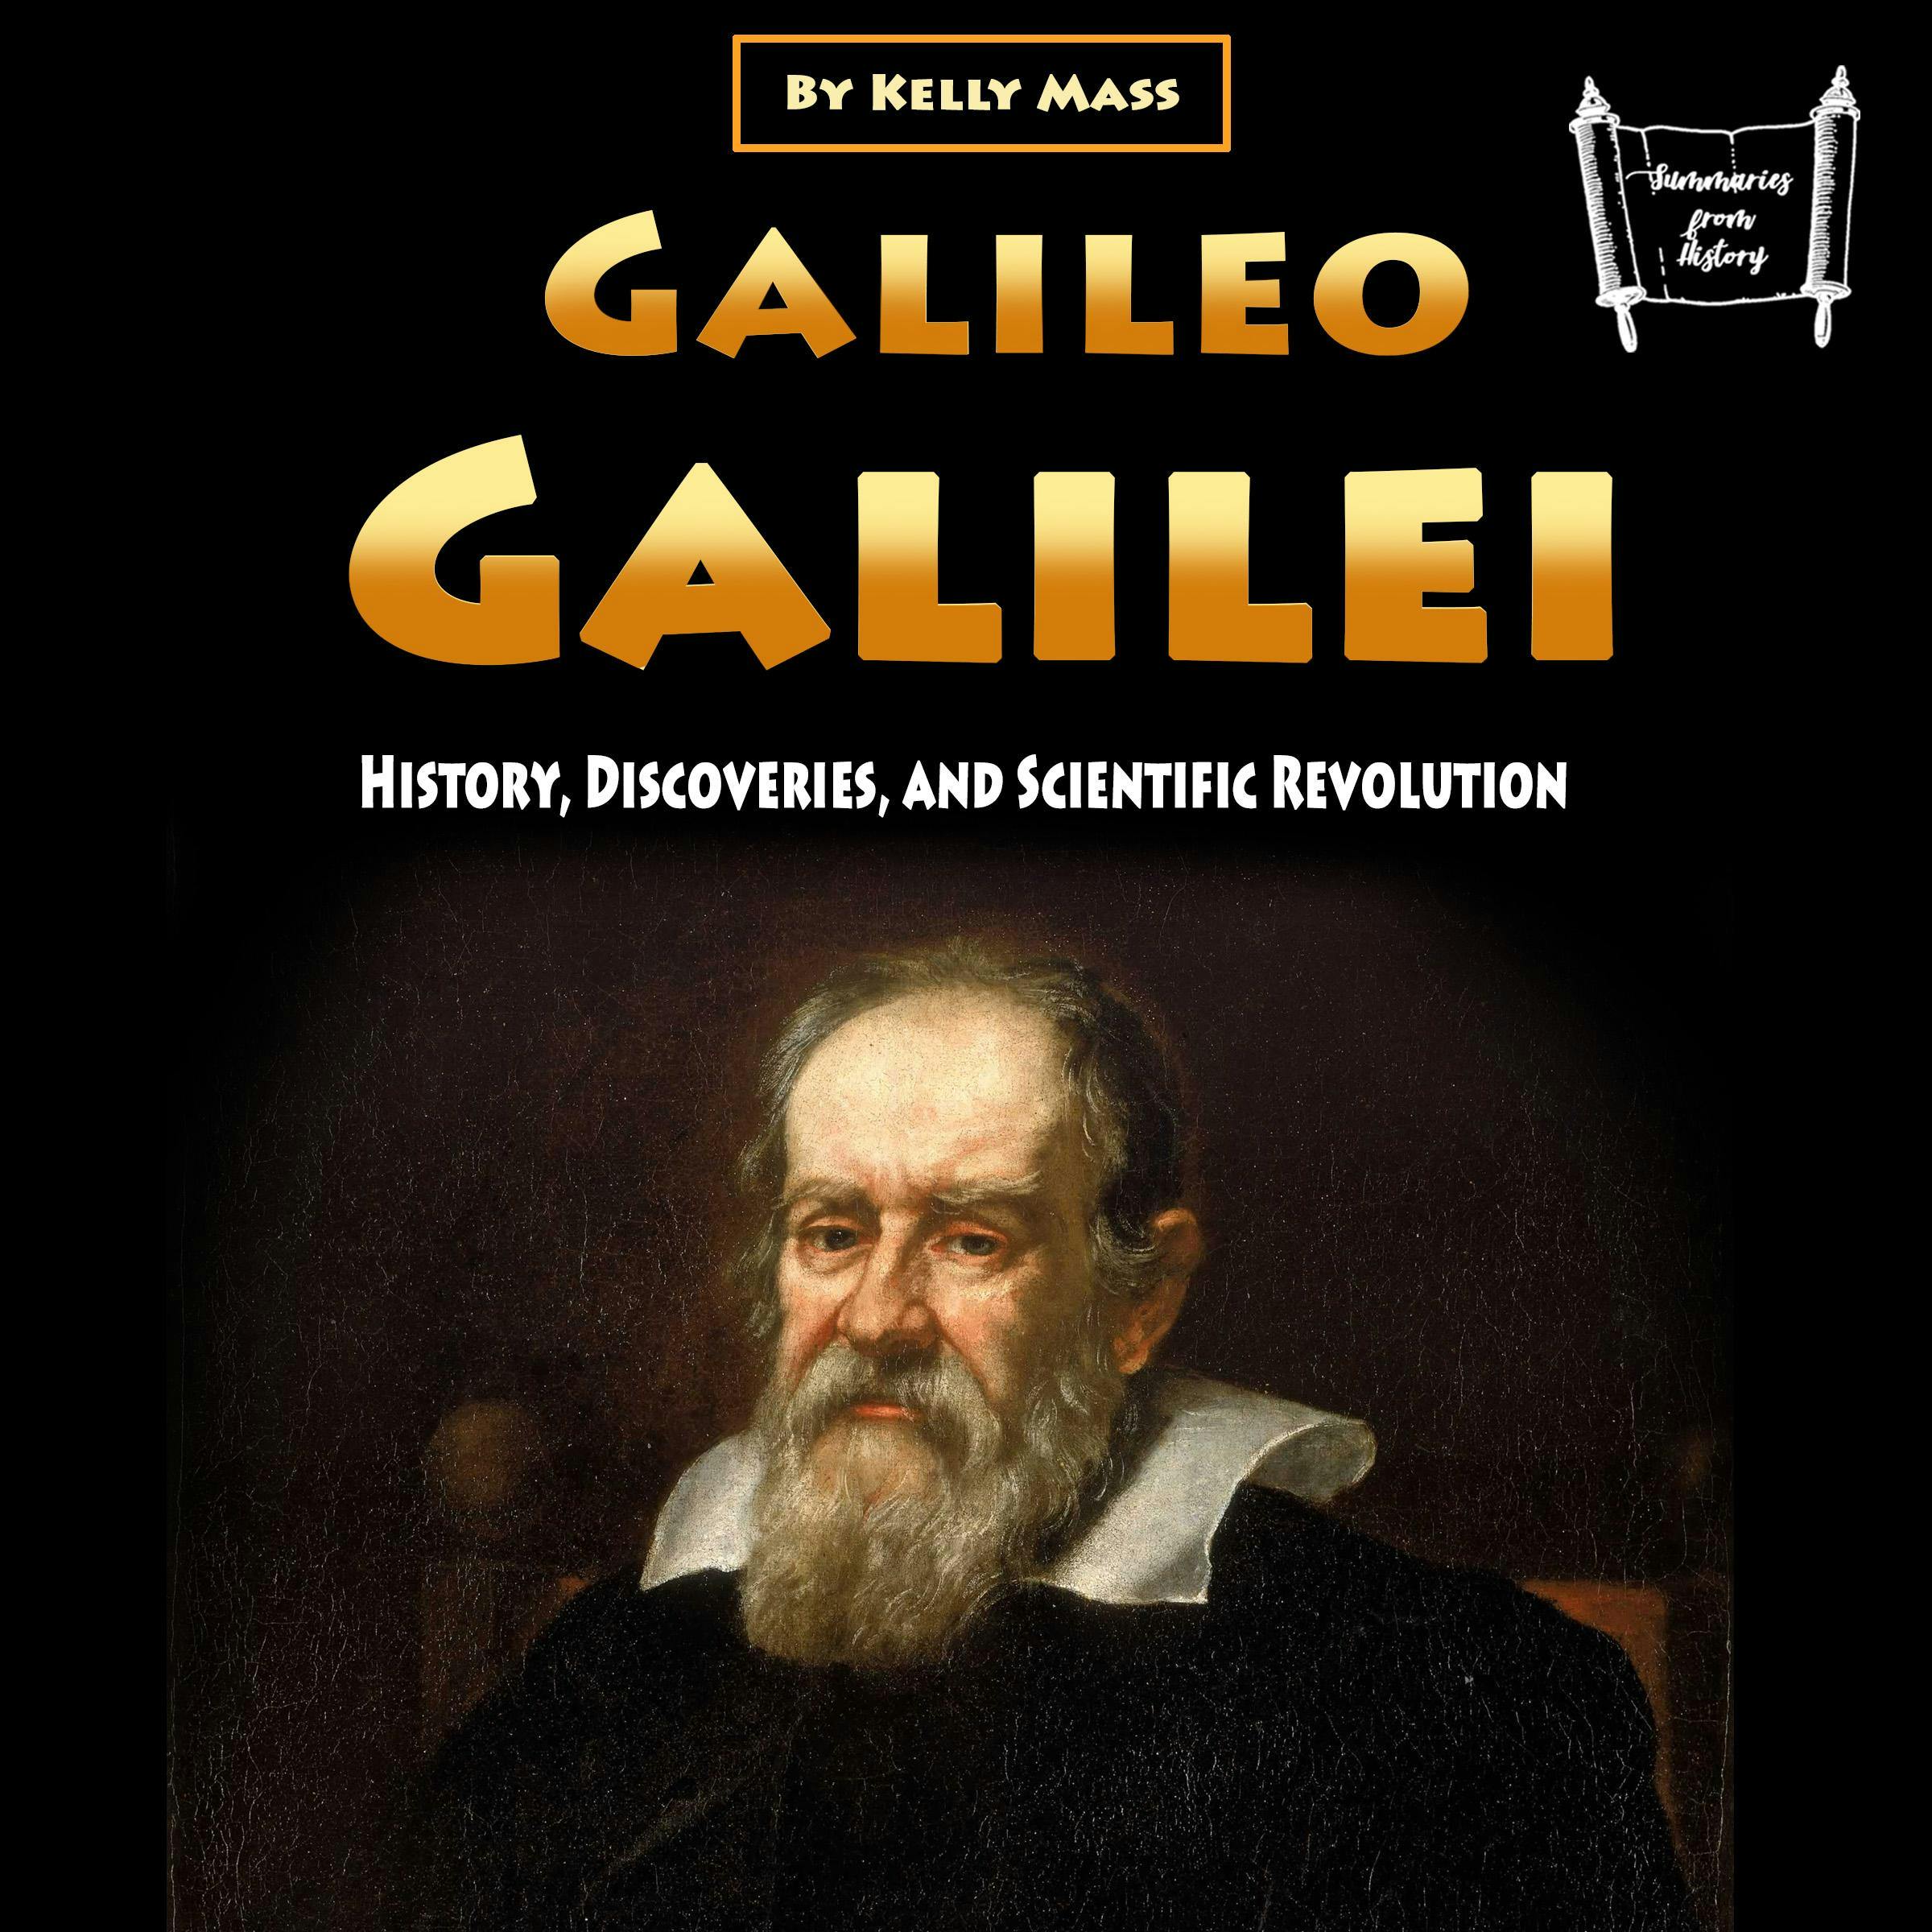 Galileo Galilei, The founder of modern physics